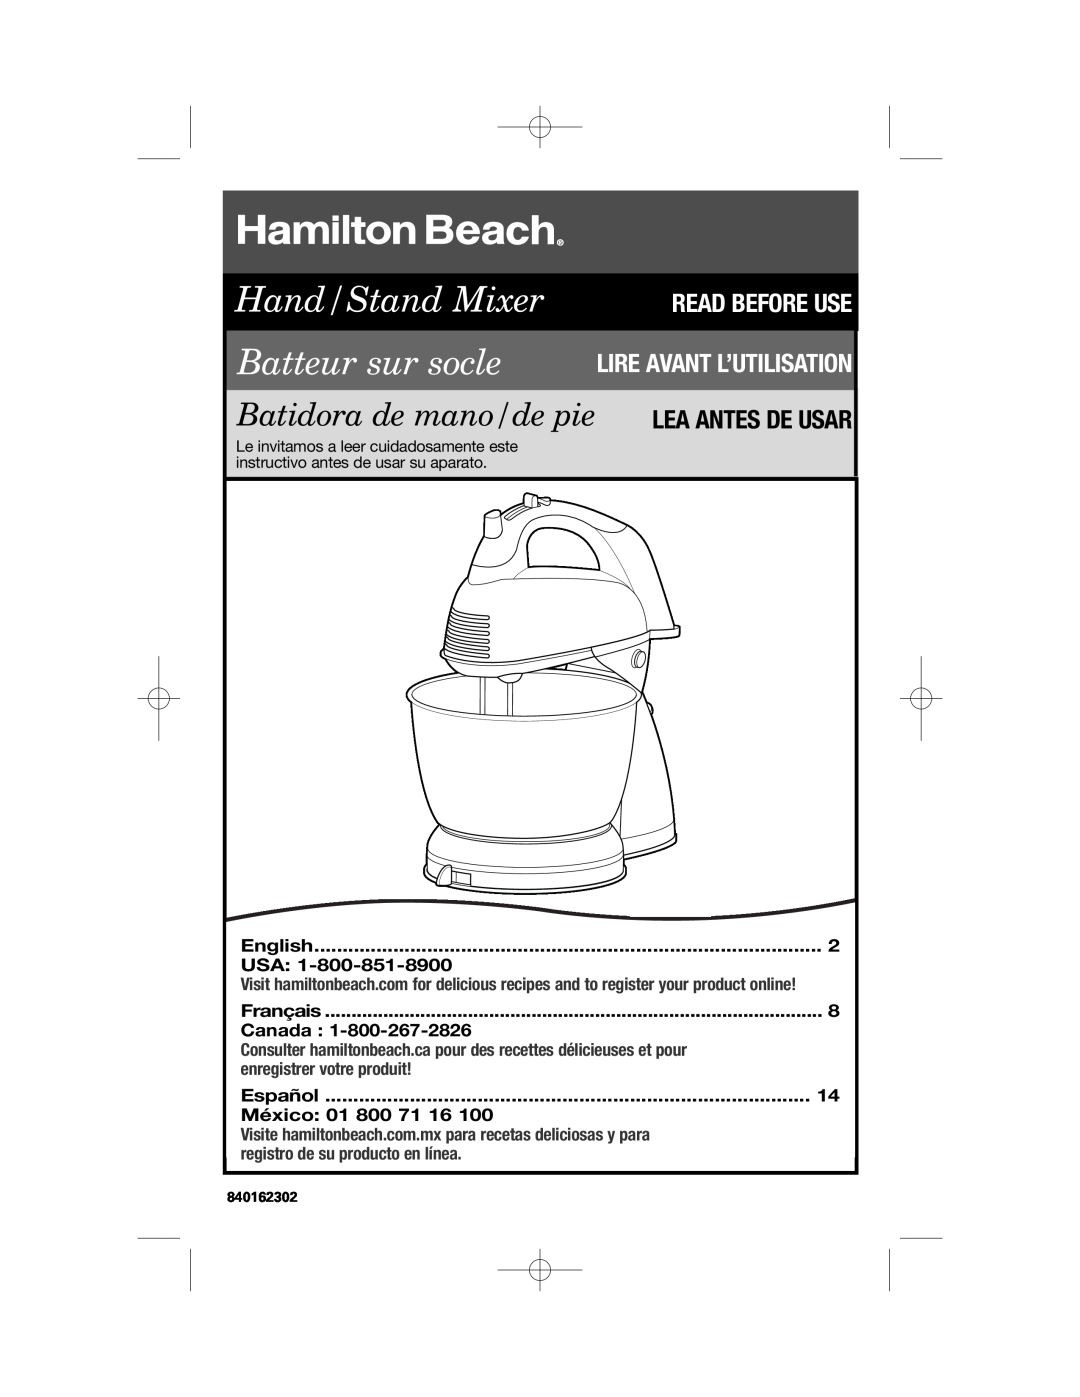 Hamilton Beach 64650 manual Lea Antes De Usar, English, Français, Canada, Español, México 01 800 71, 840162302 